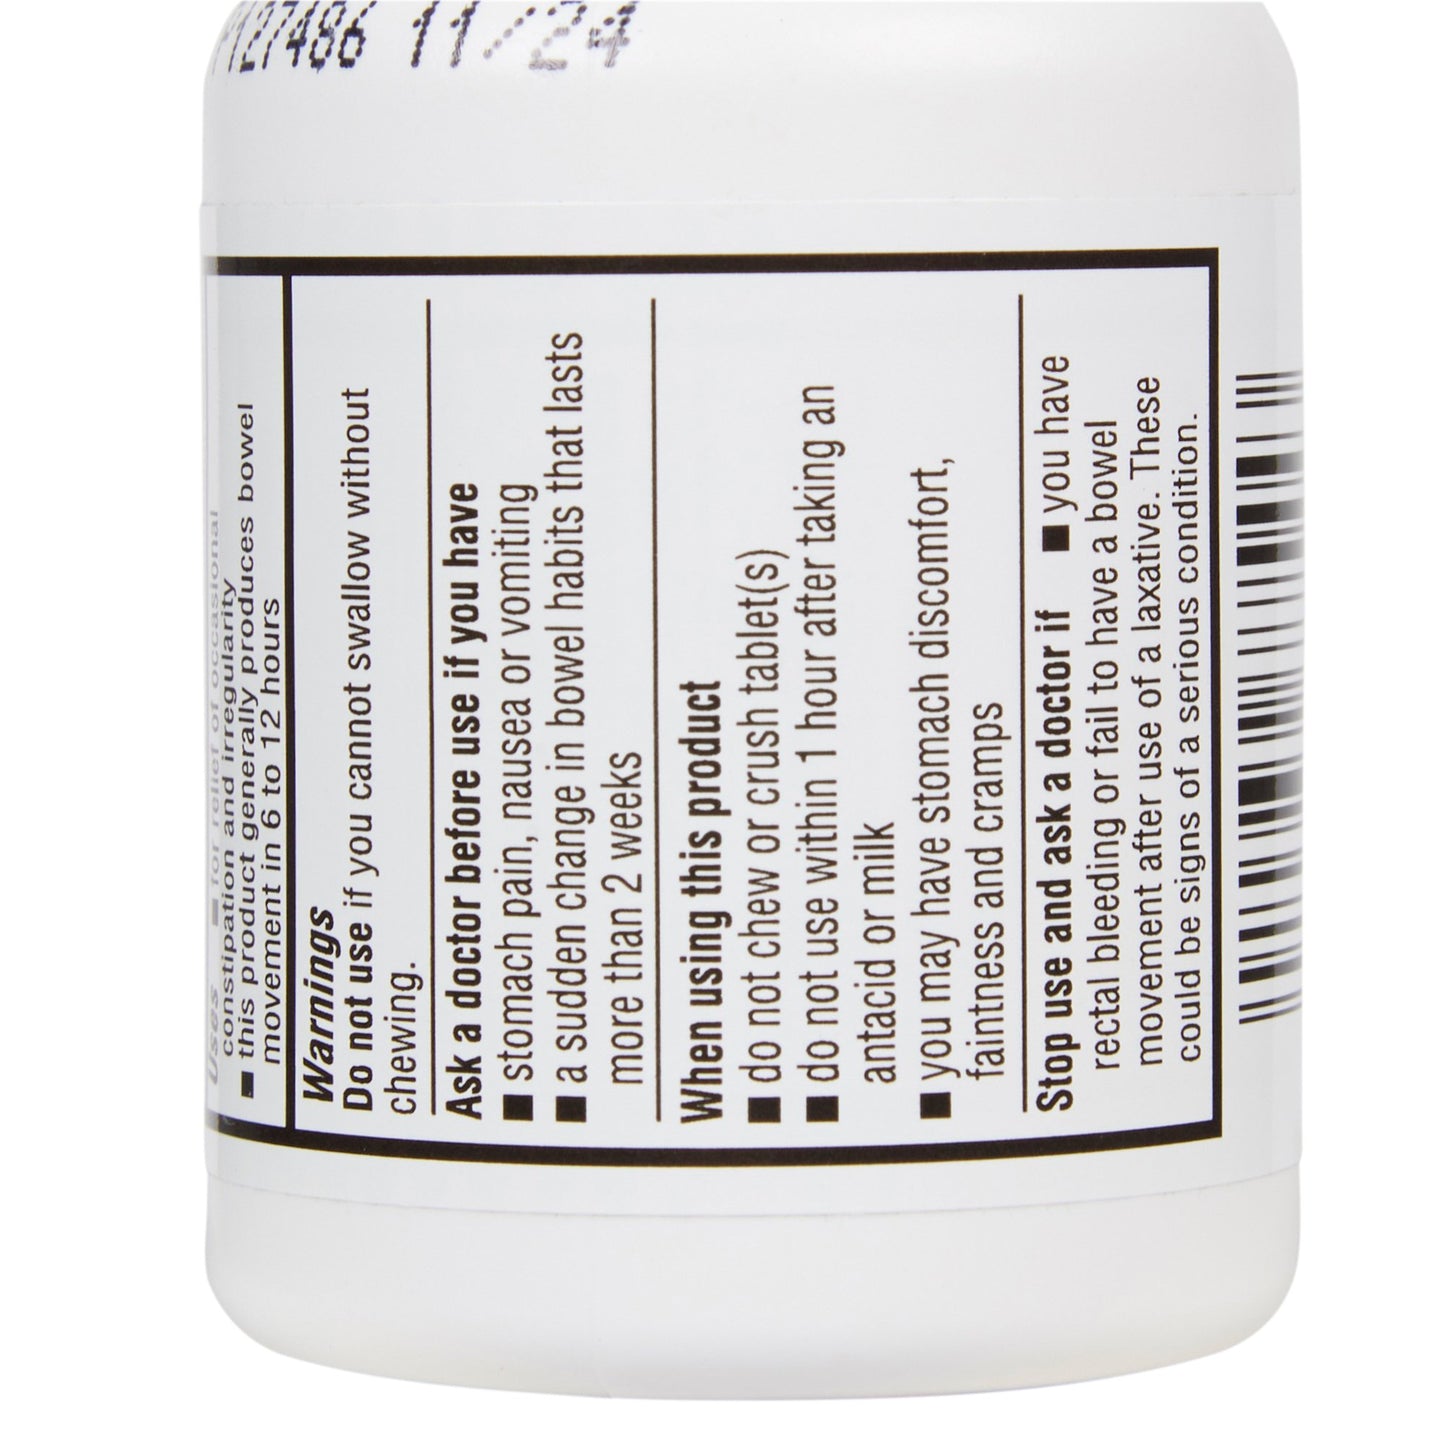 Sunmark® Bisacodyl Laxative